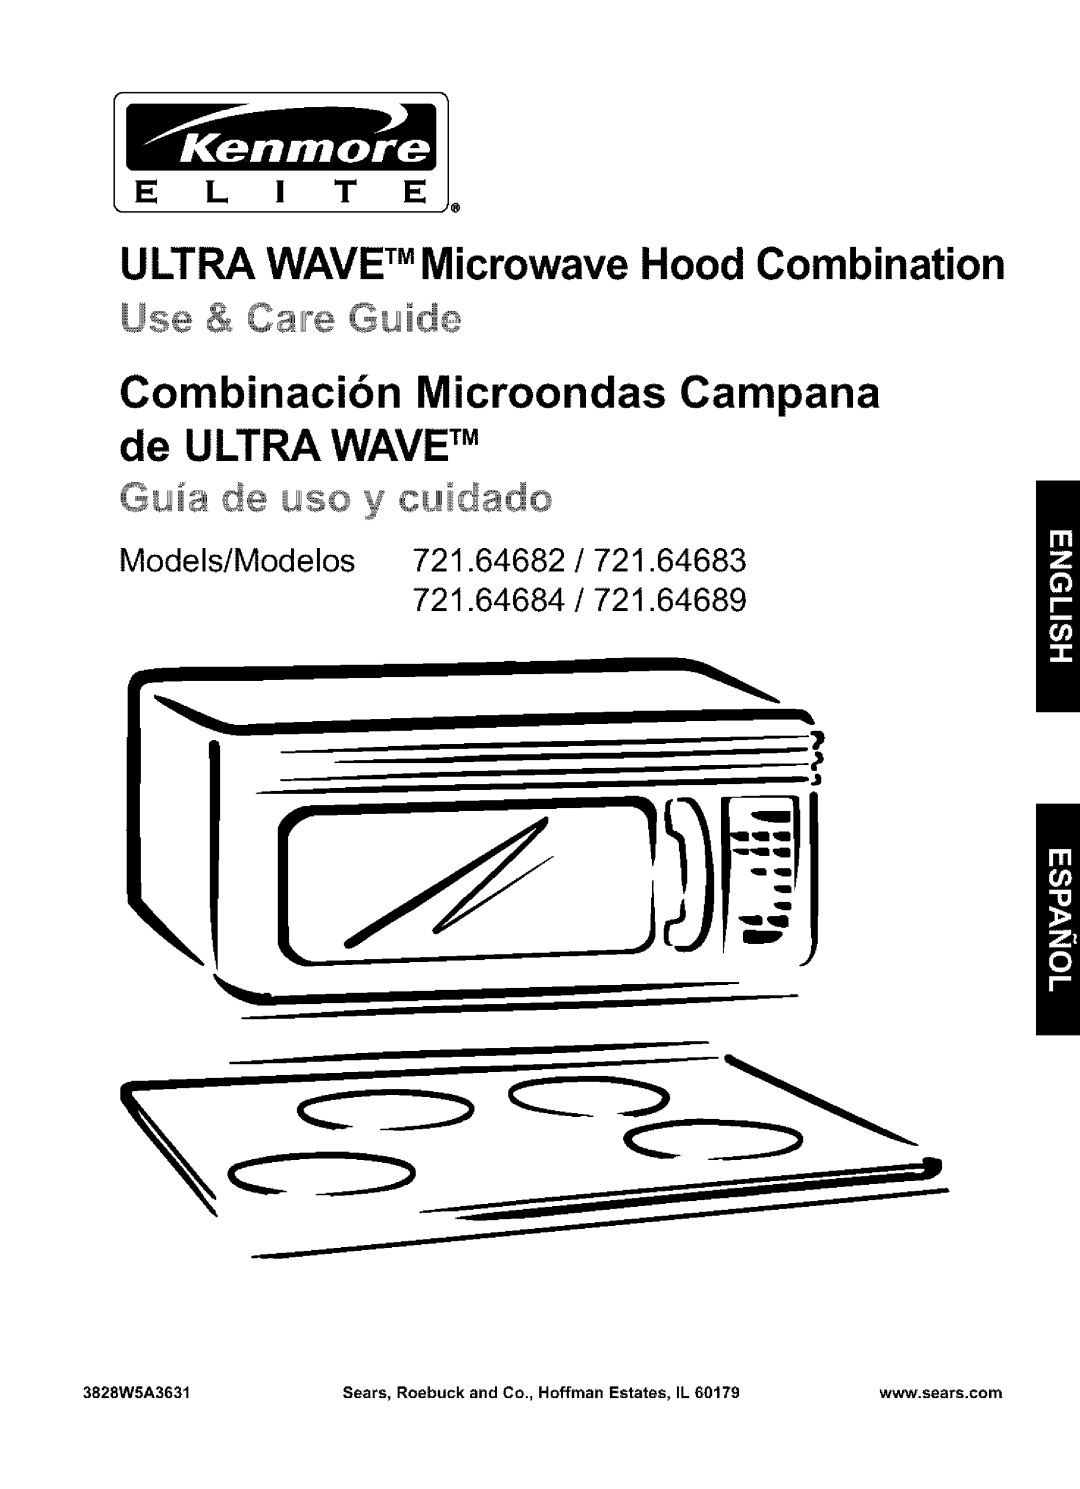 Kenmore 721.64684 manual Combinacibn Microondas Campana de ULTRA WAVE TM, E L I T E, Guia de uso y cuidado, 3828W5A3631 